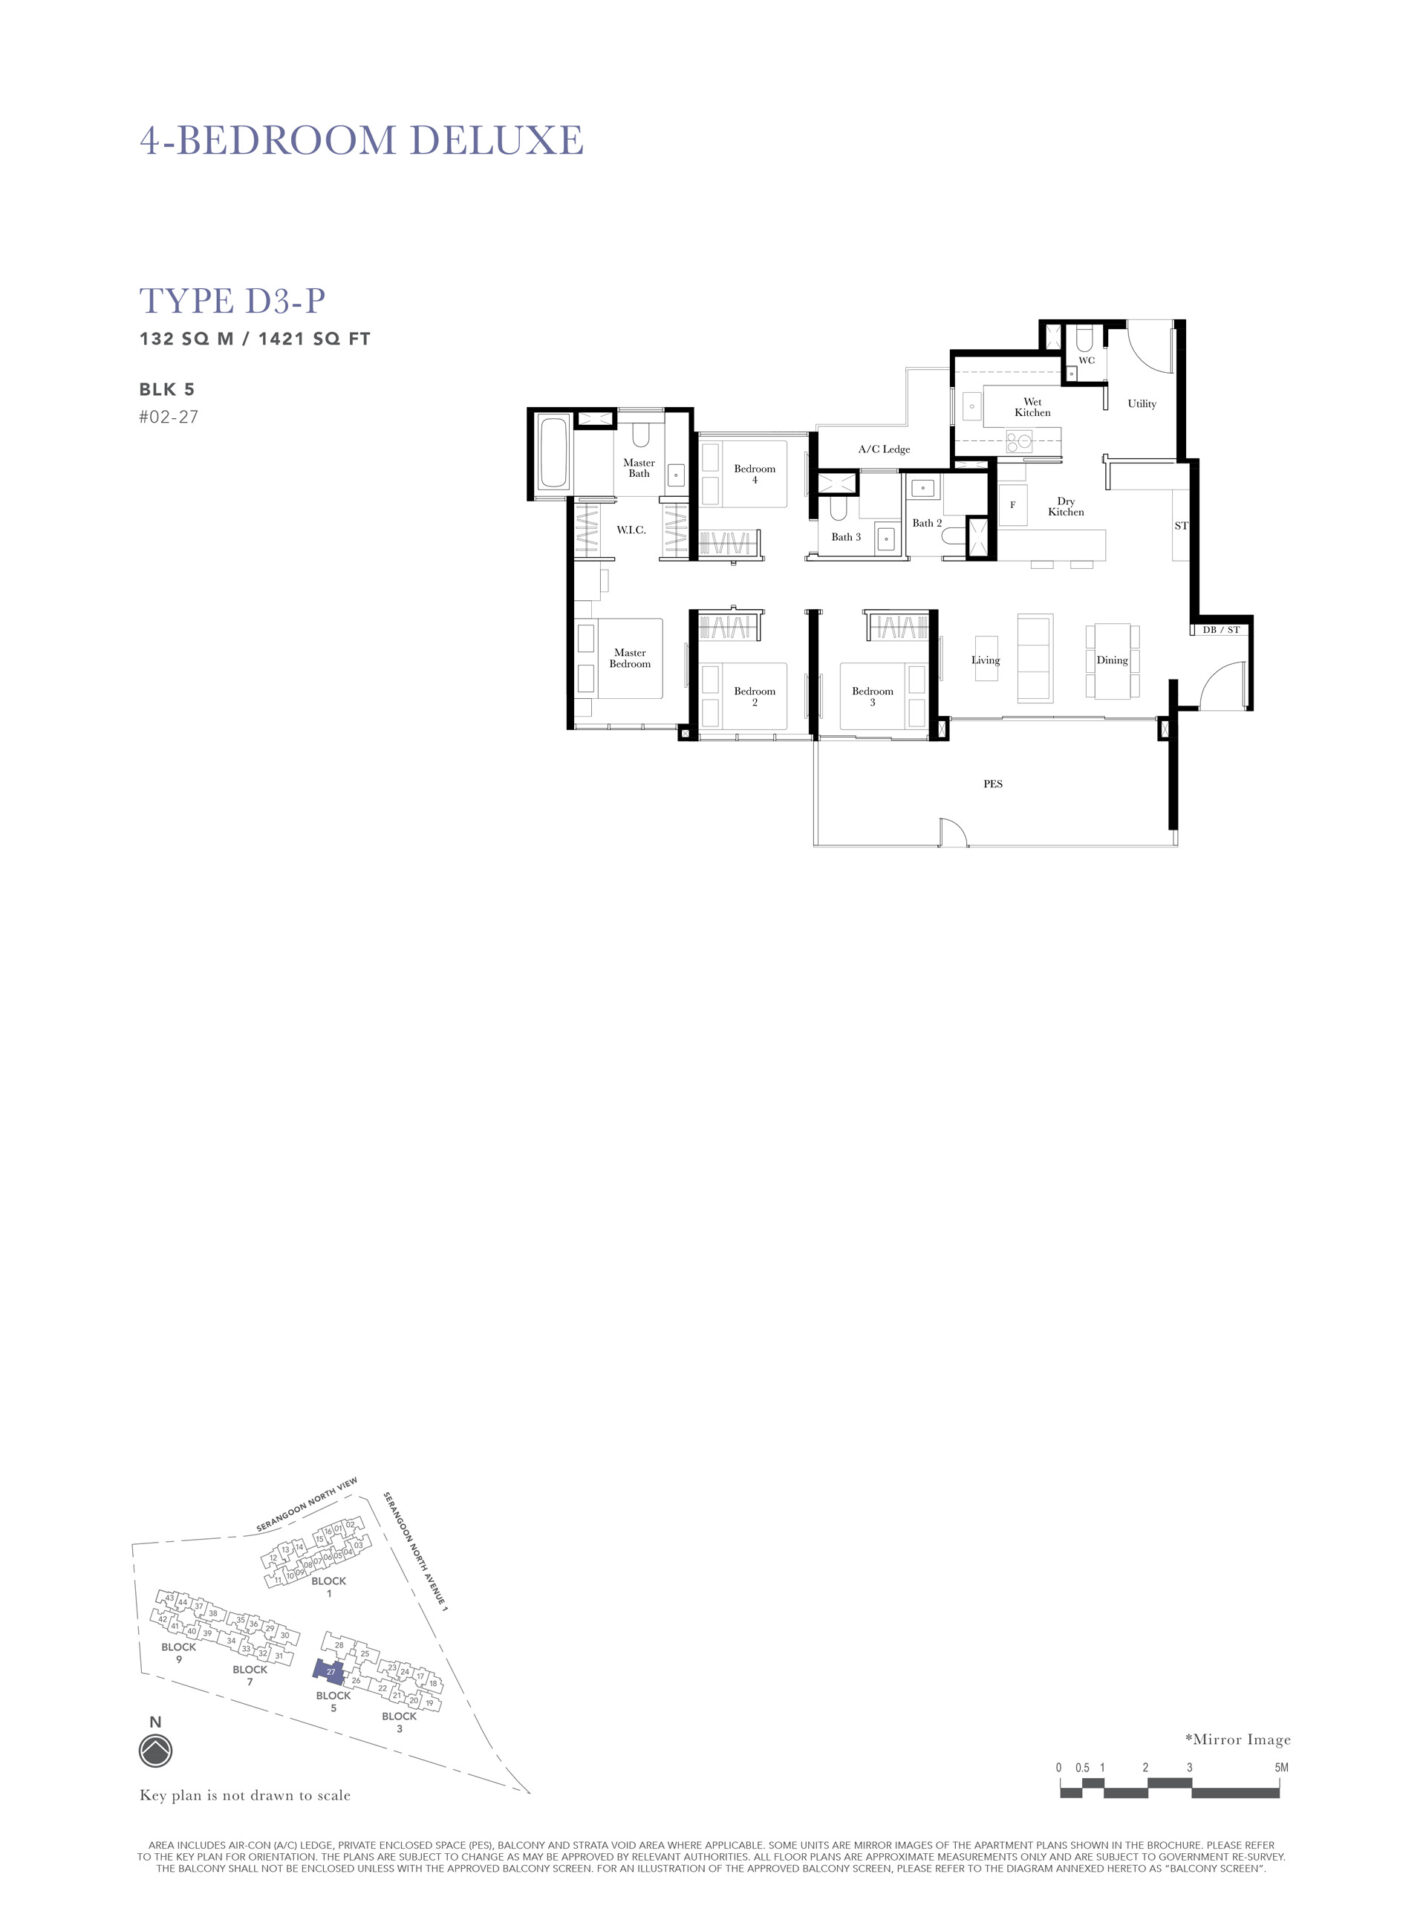 The-Garden-Residences-4-Bedroom-Deluxe-Type-D3P-1421sf